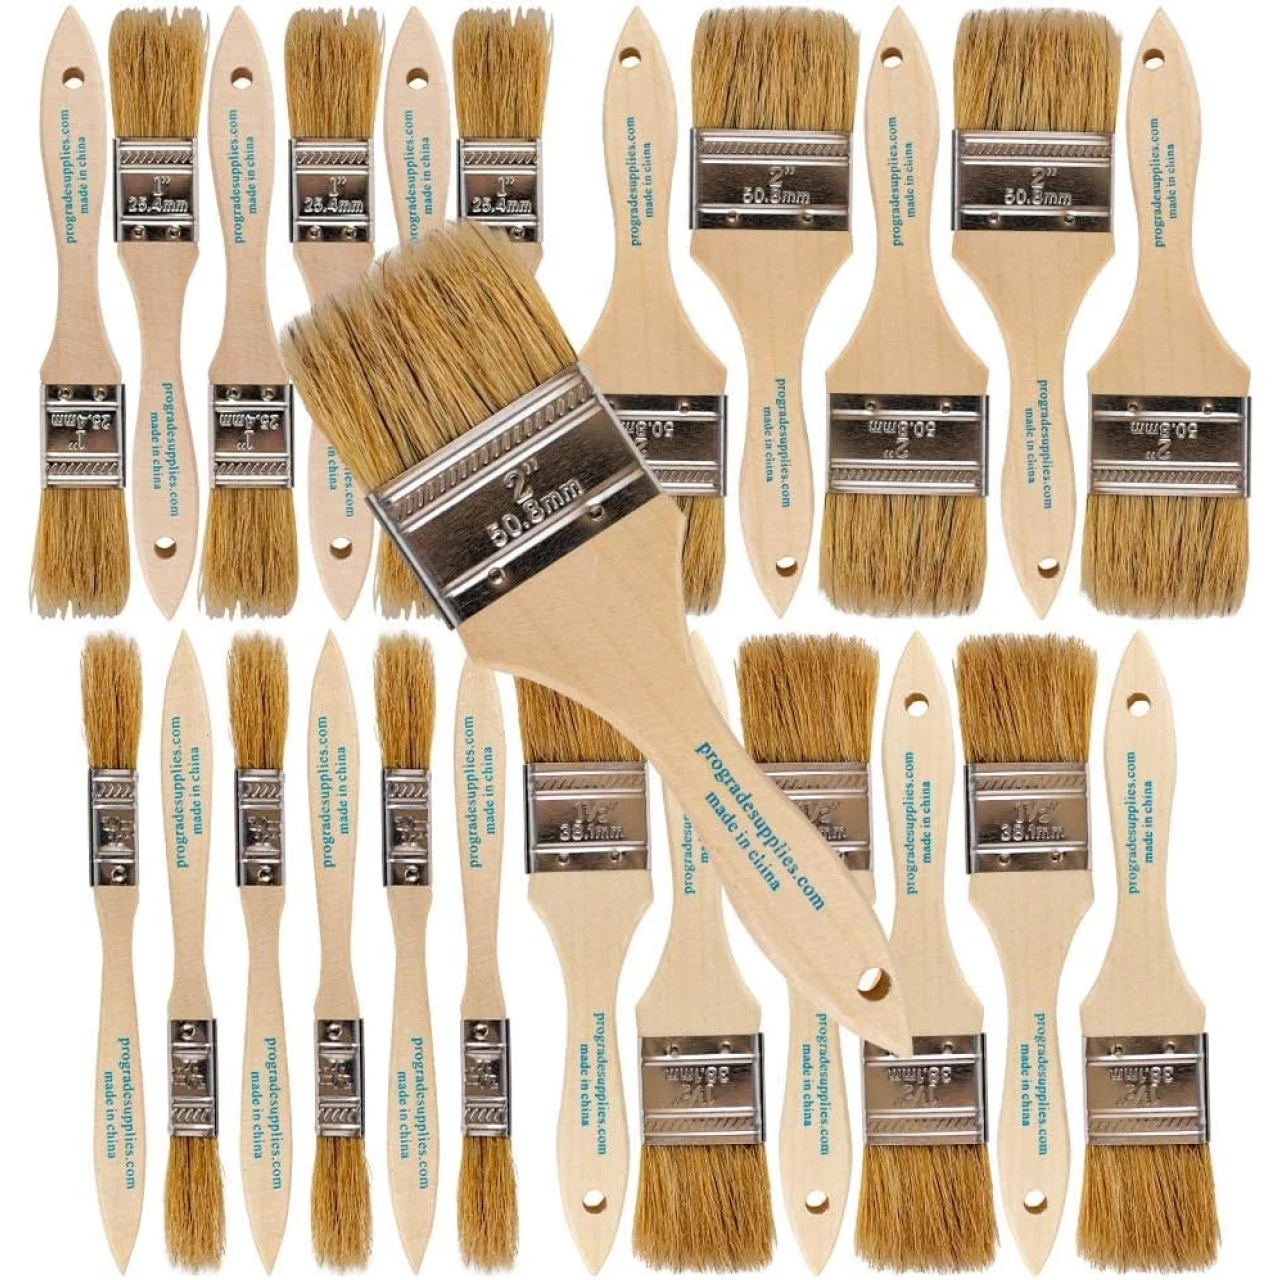 Pro Grade - Chip Paint Brushes - 24 Piece Variety Chip Brush Set